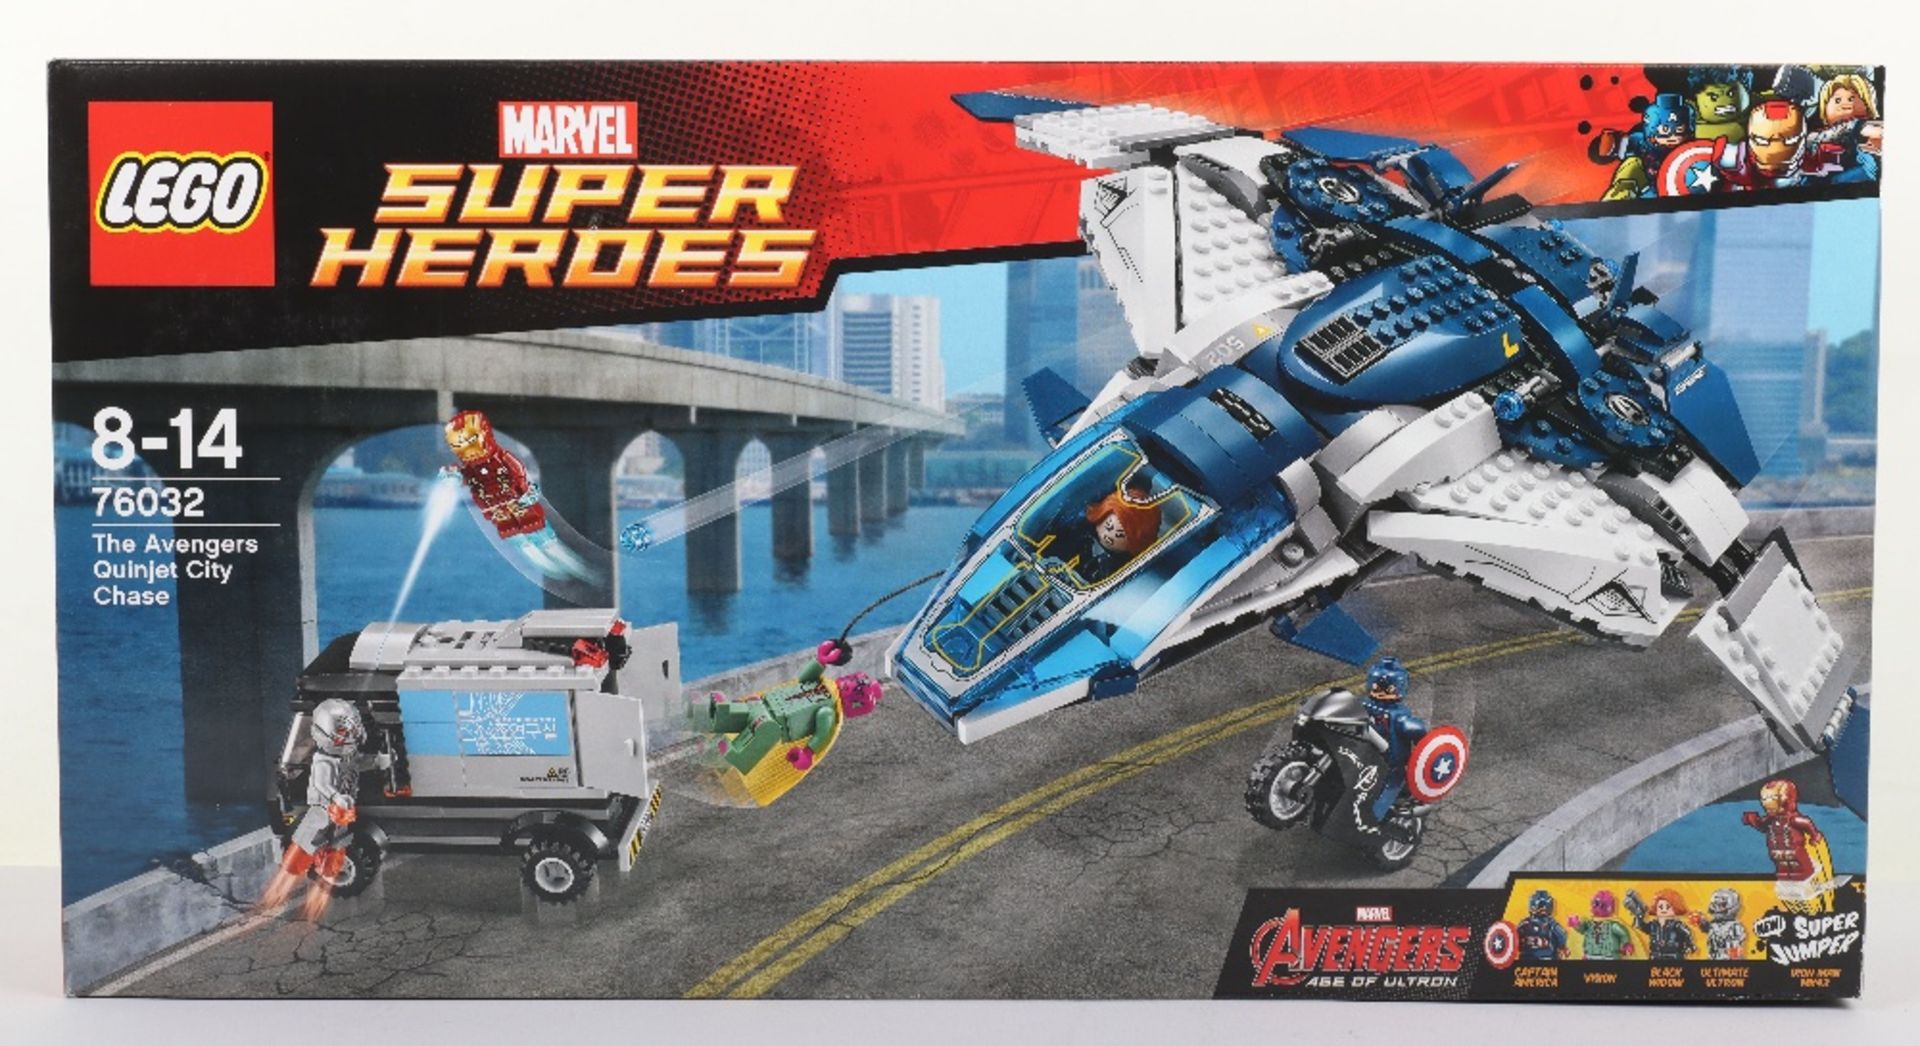 Lego Marvel Superheroes 76032 The Avengers Quinjet city chase sealed boxed